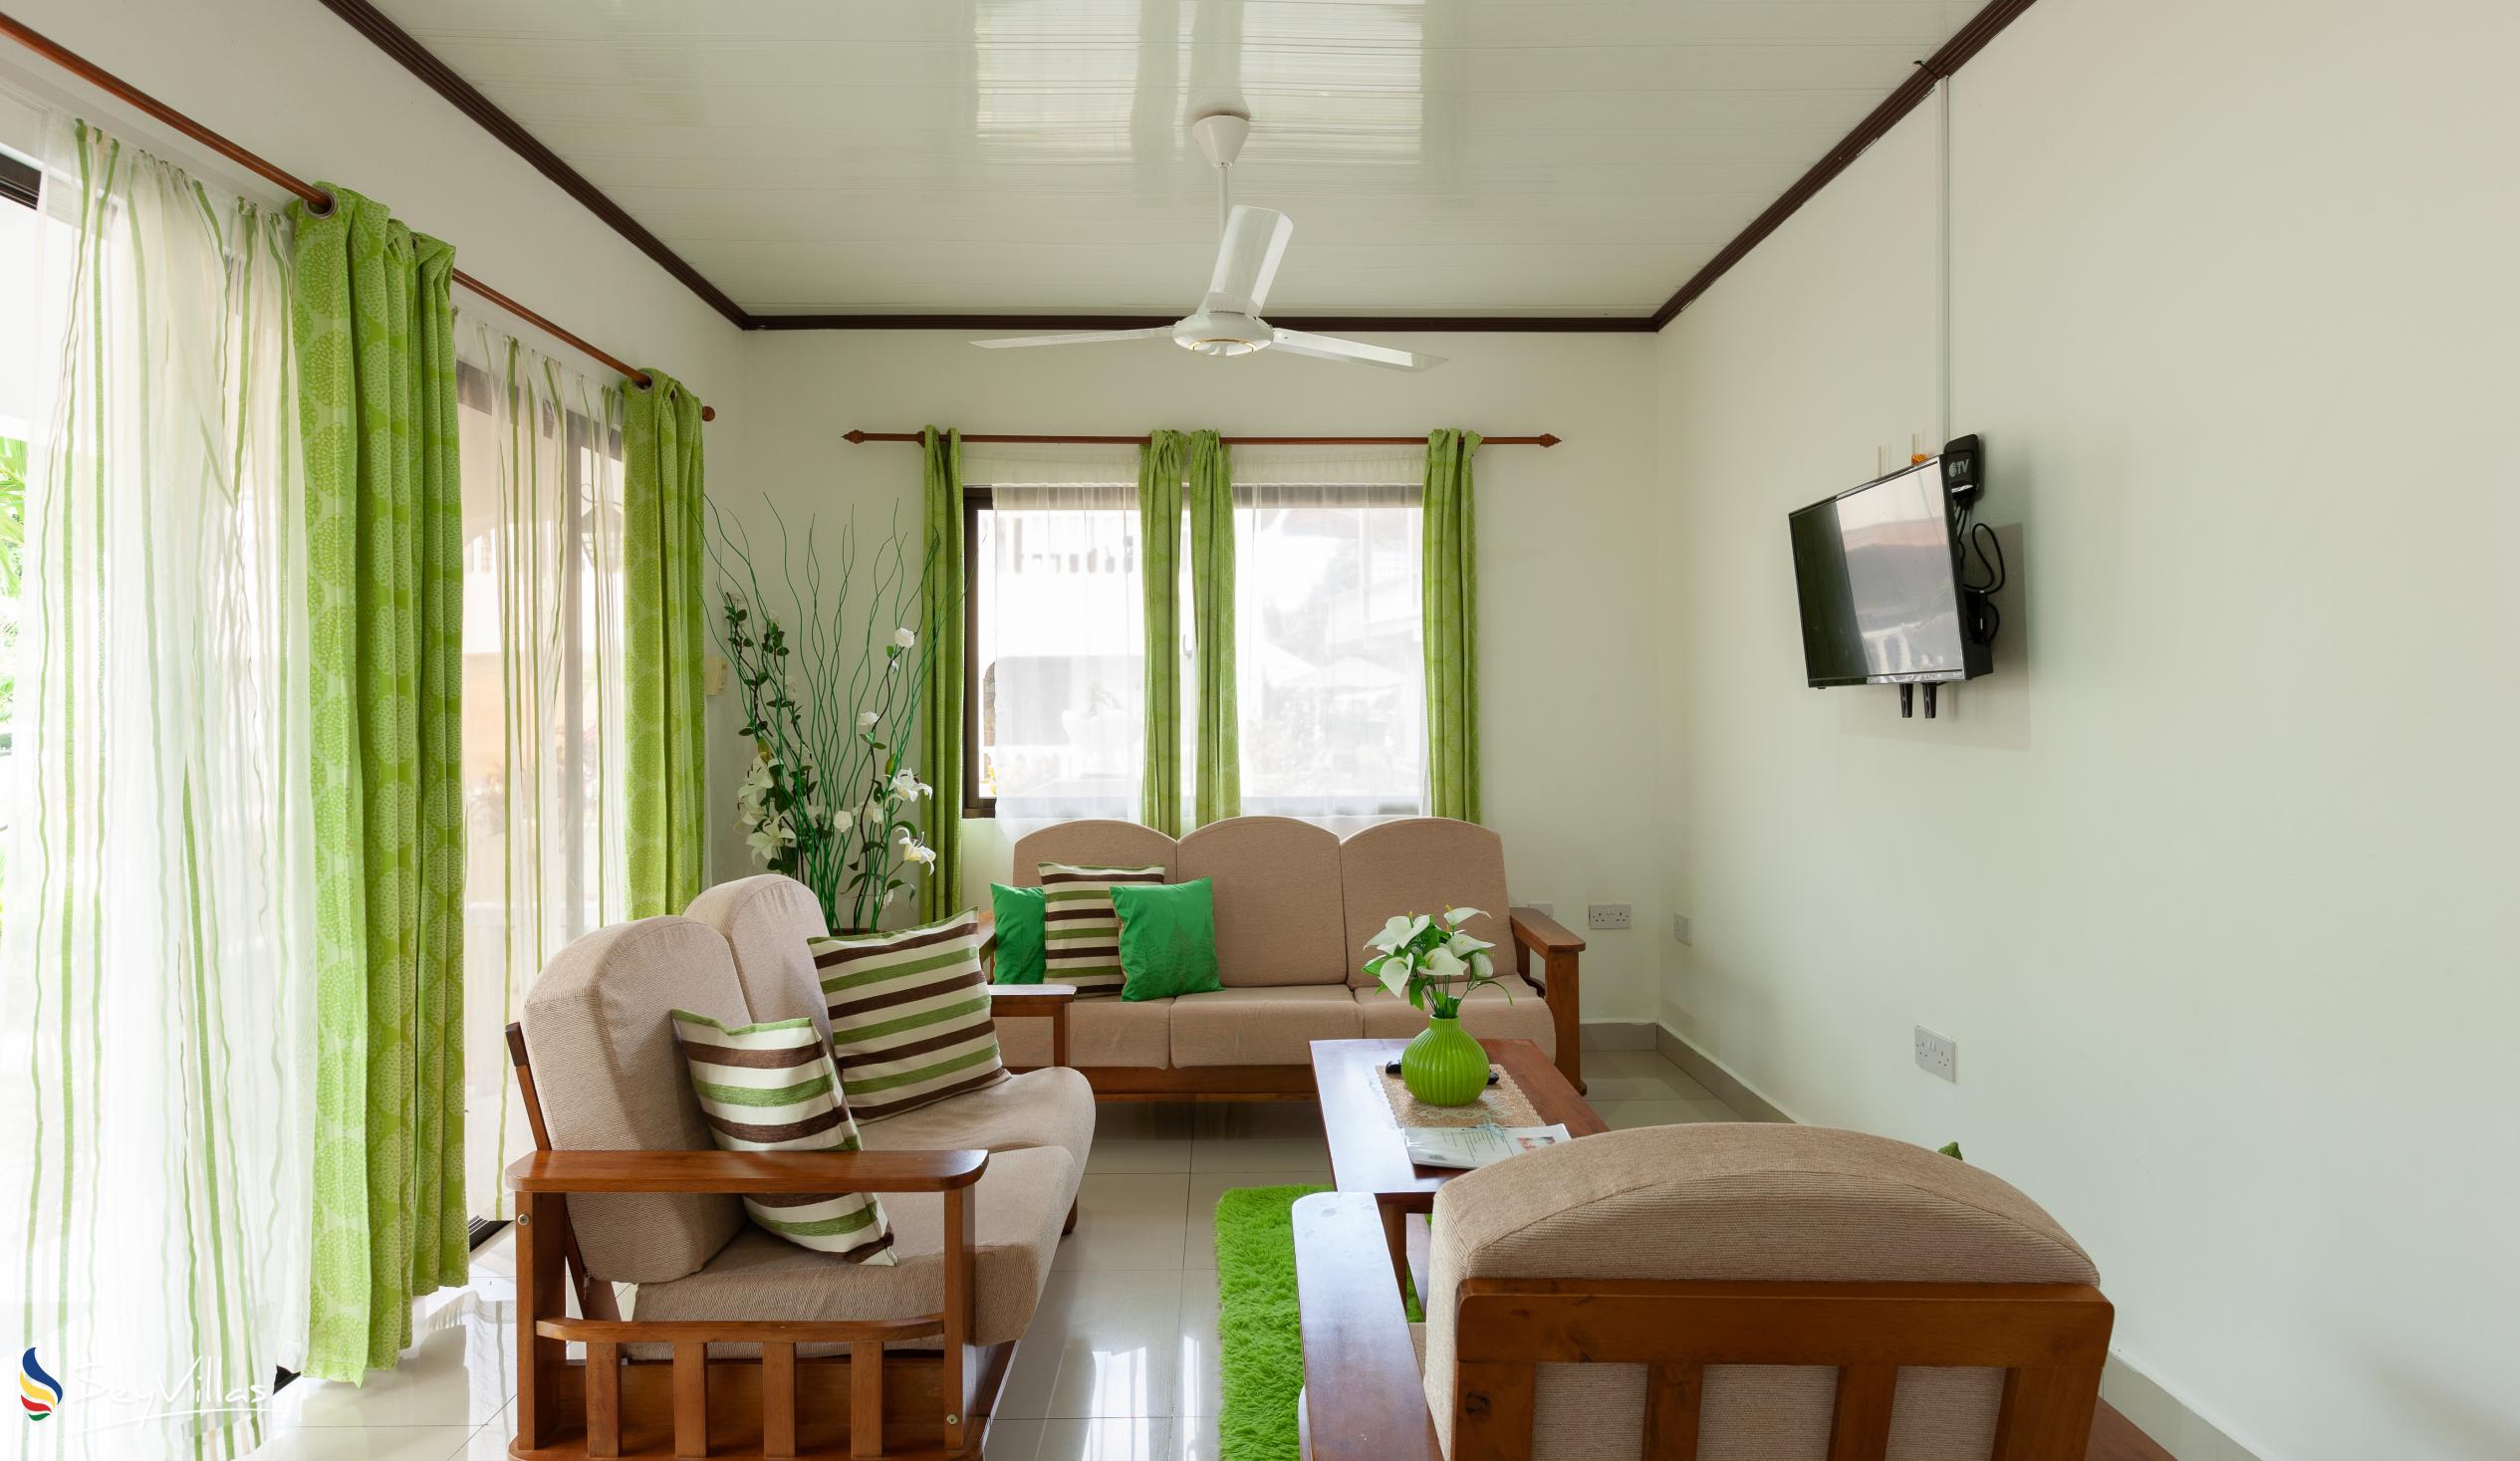 Photo 52: Belle Vacance Self Catering - 1-Bedroom Apartment - Praslin (Seychelles)